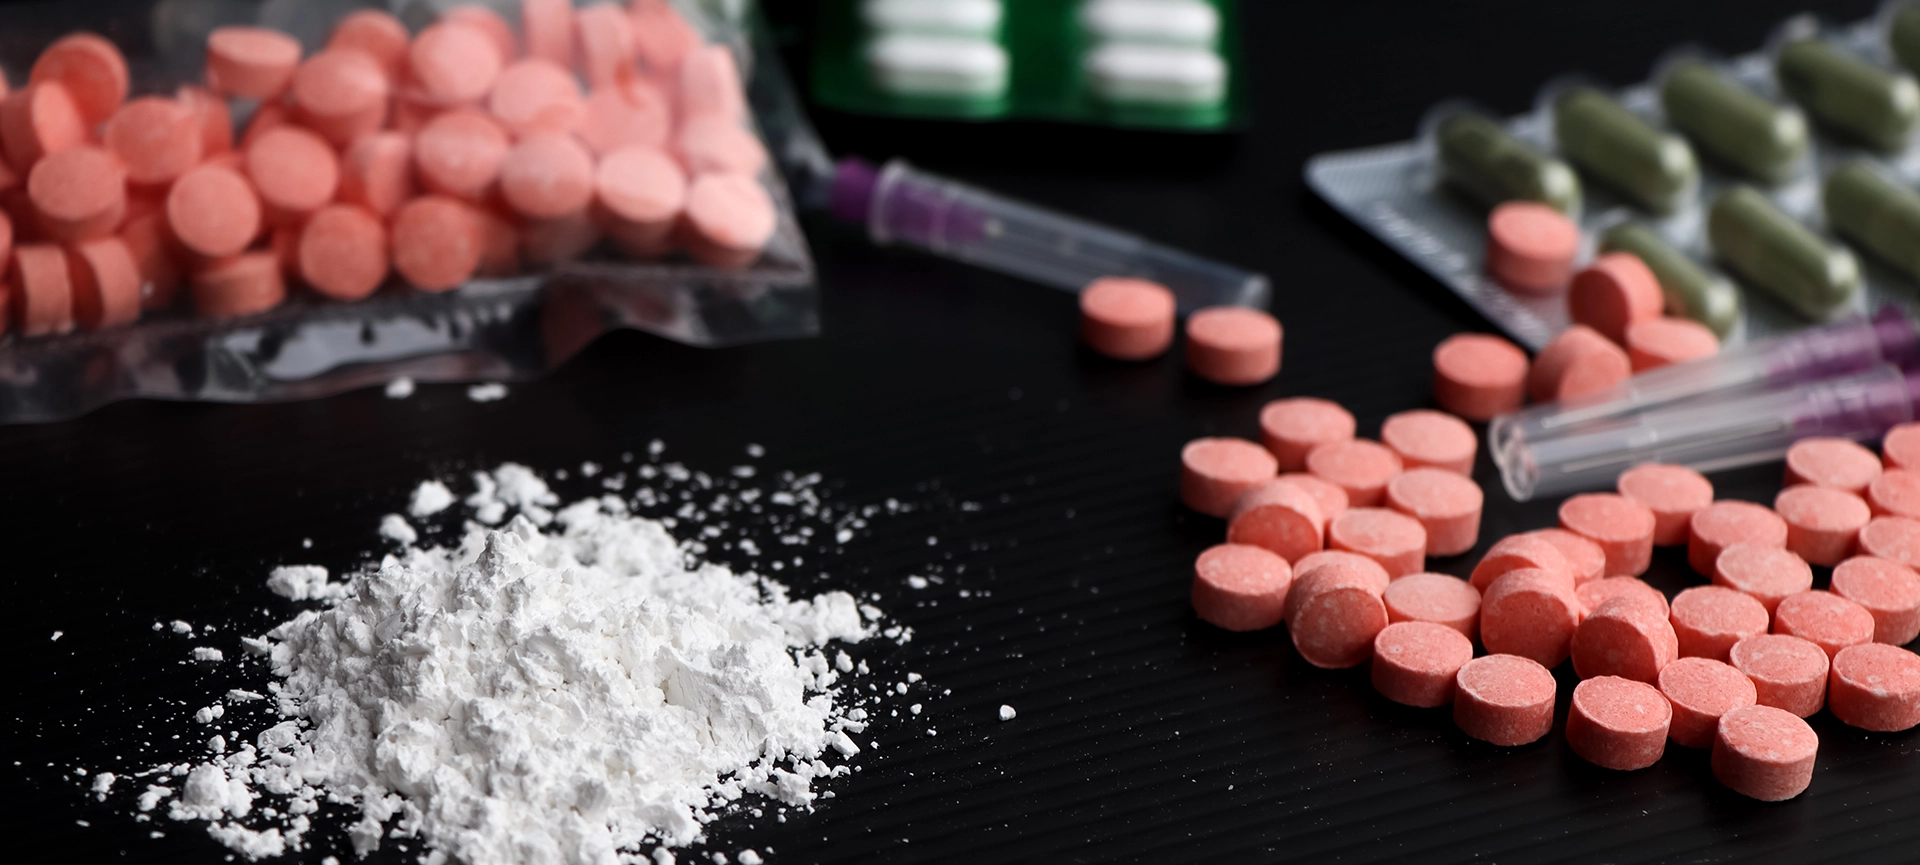 treatment options for amphetamine addiction